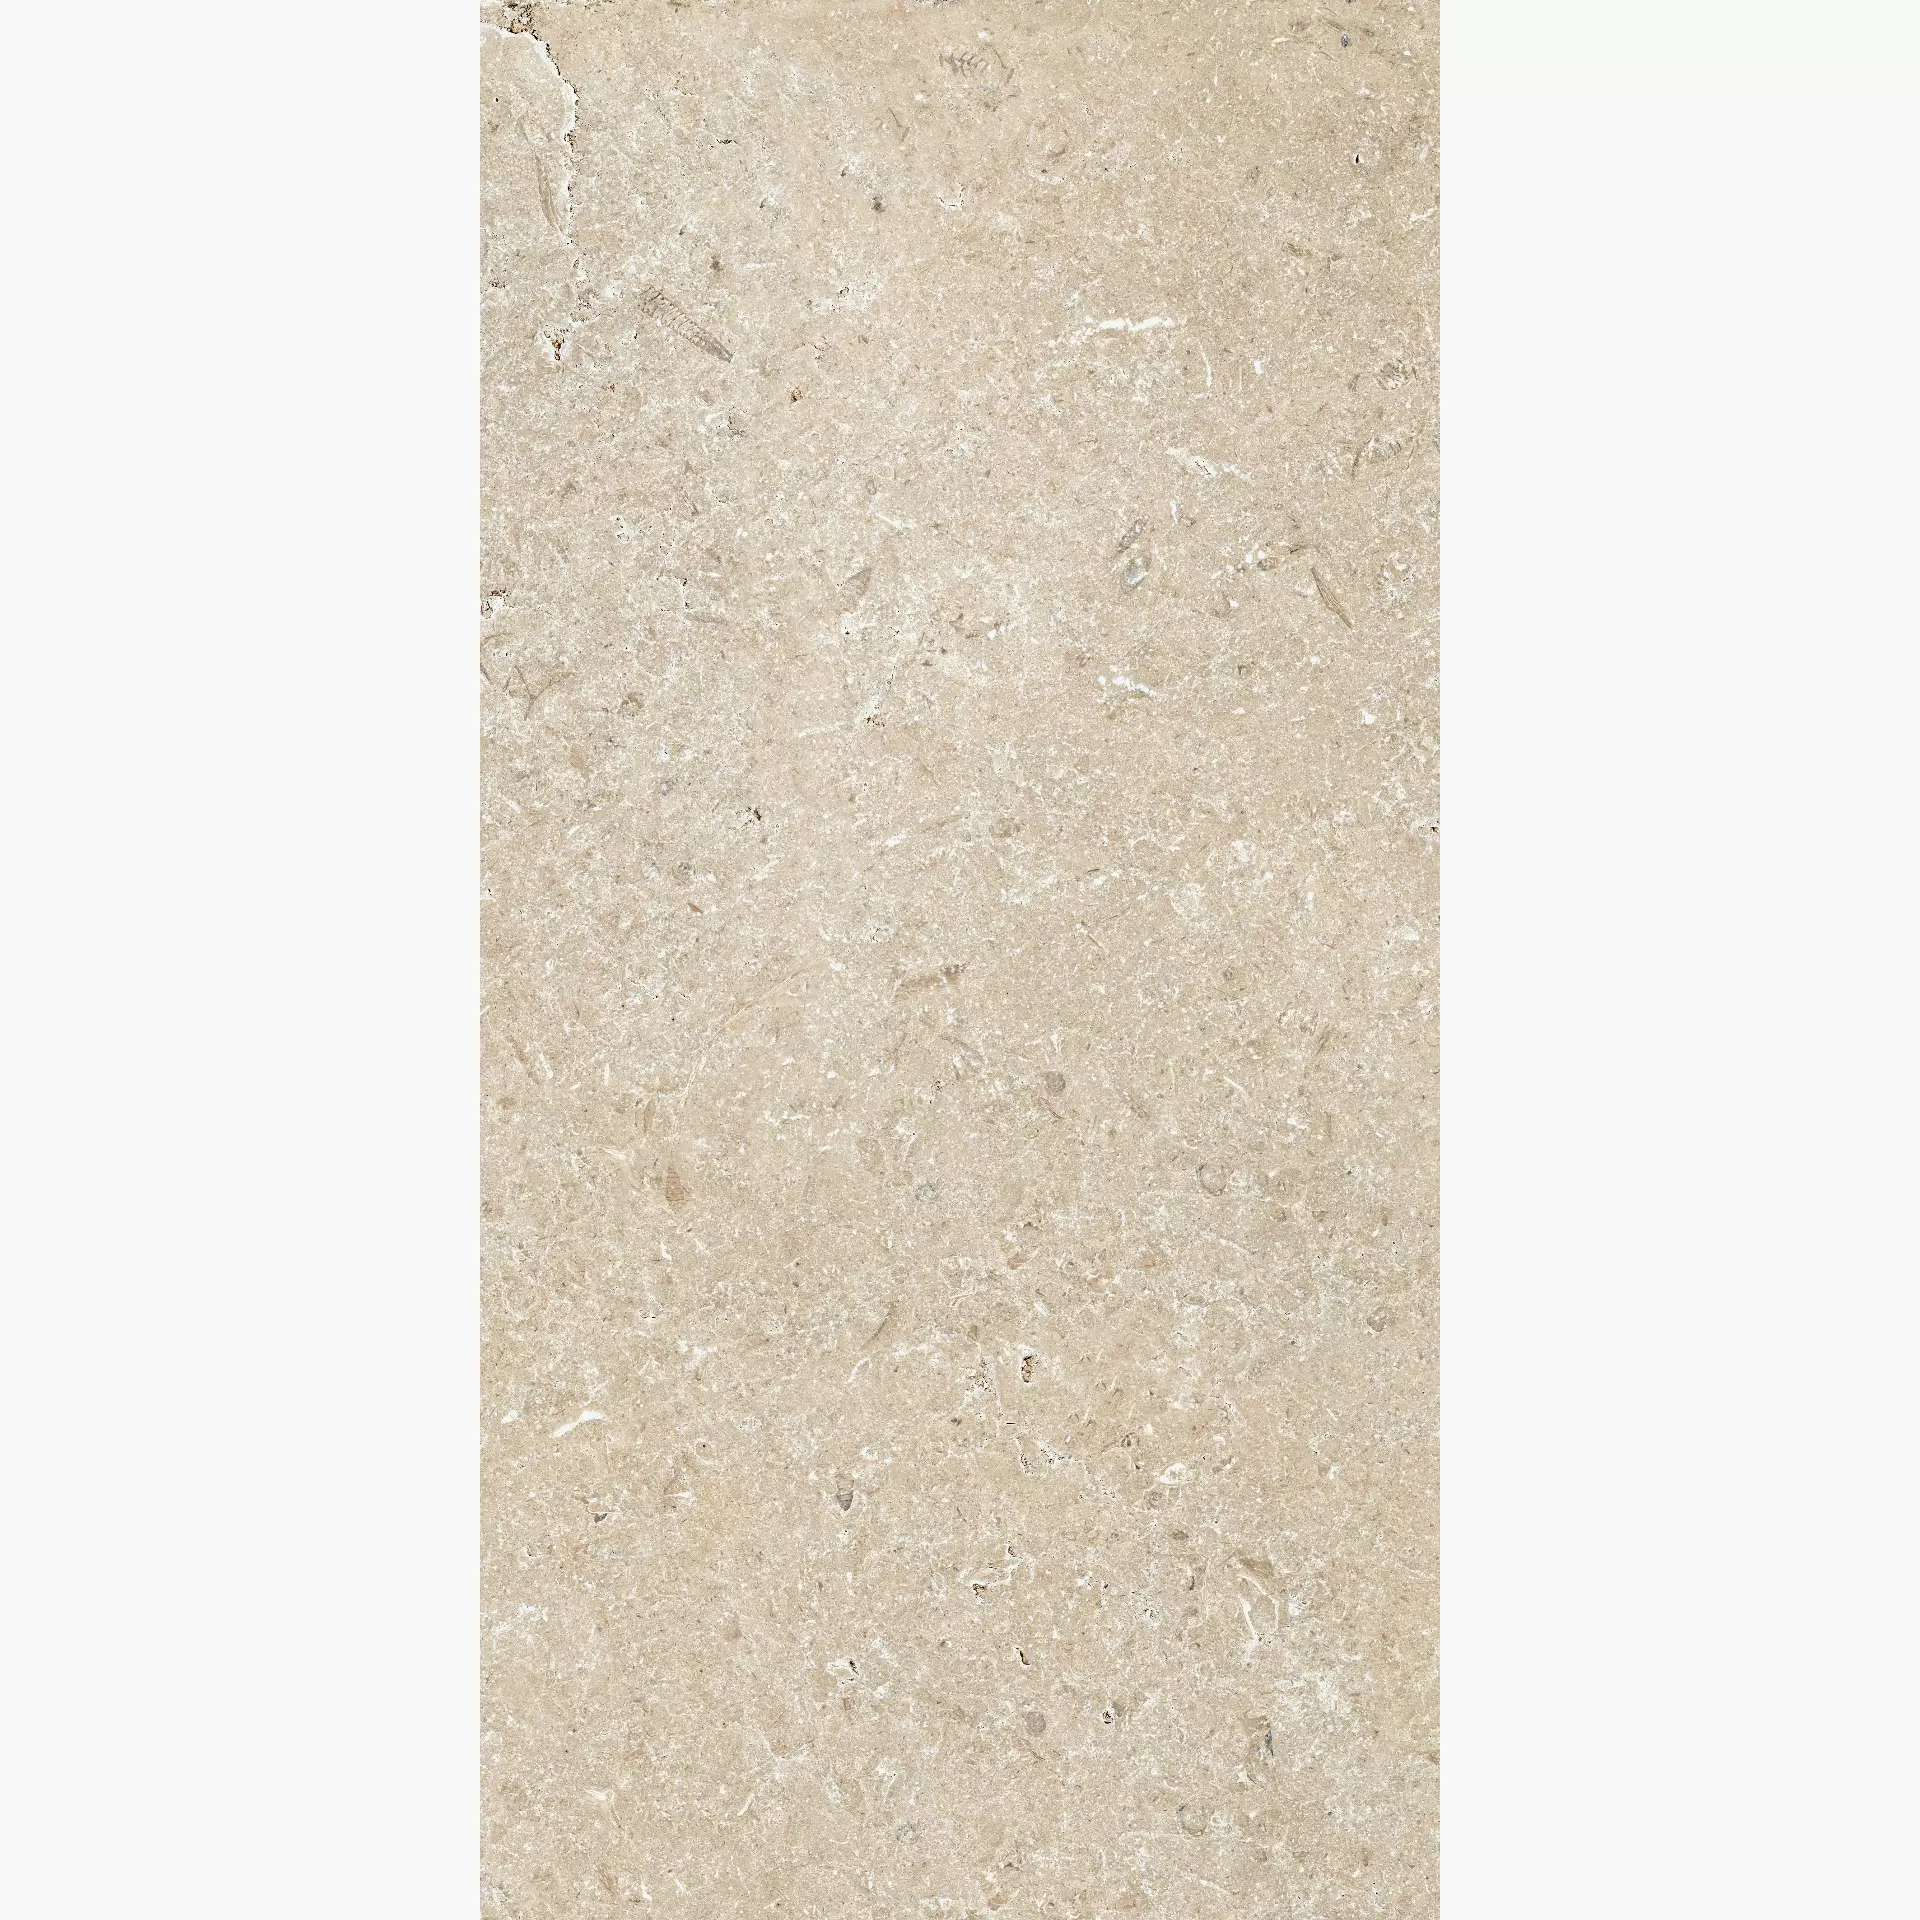 Cottodeste Secret Stone Precious Beige Naturale Protect EG-SS10 30x60cm rectified 14mm